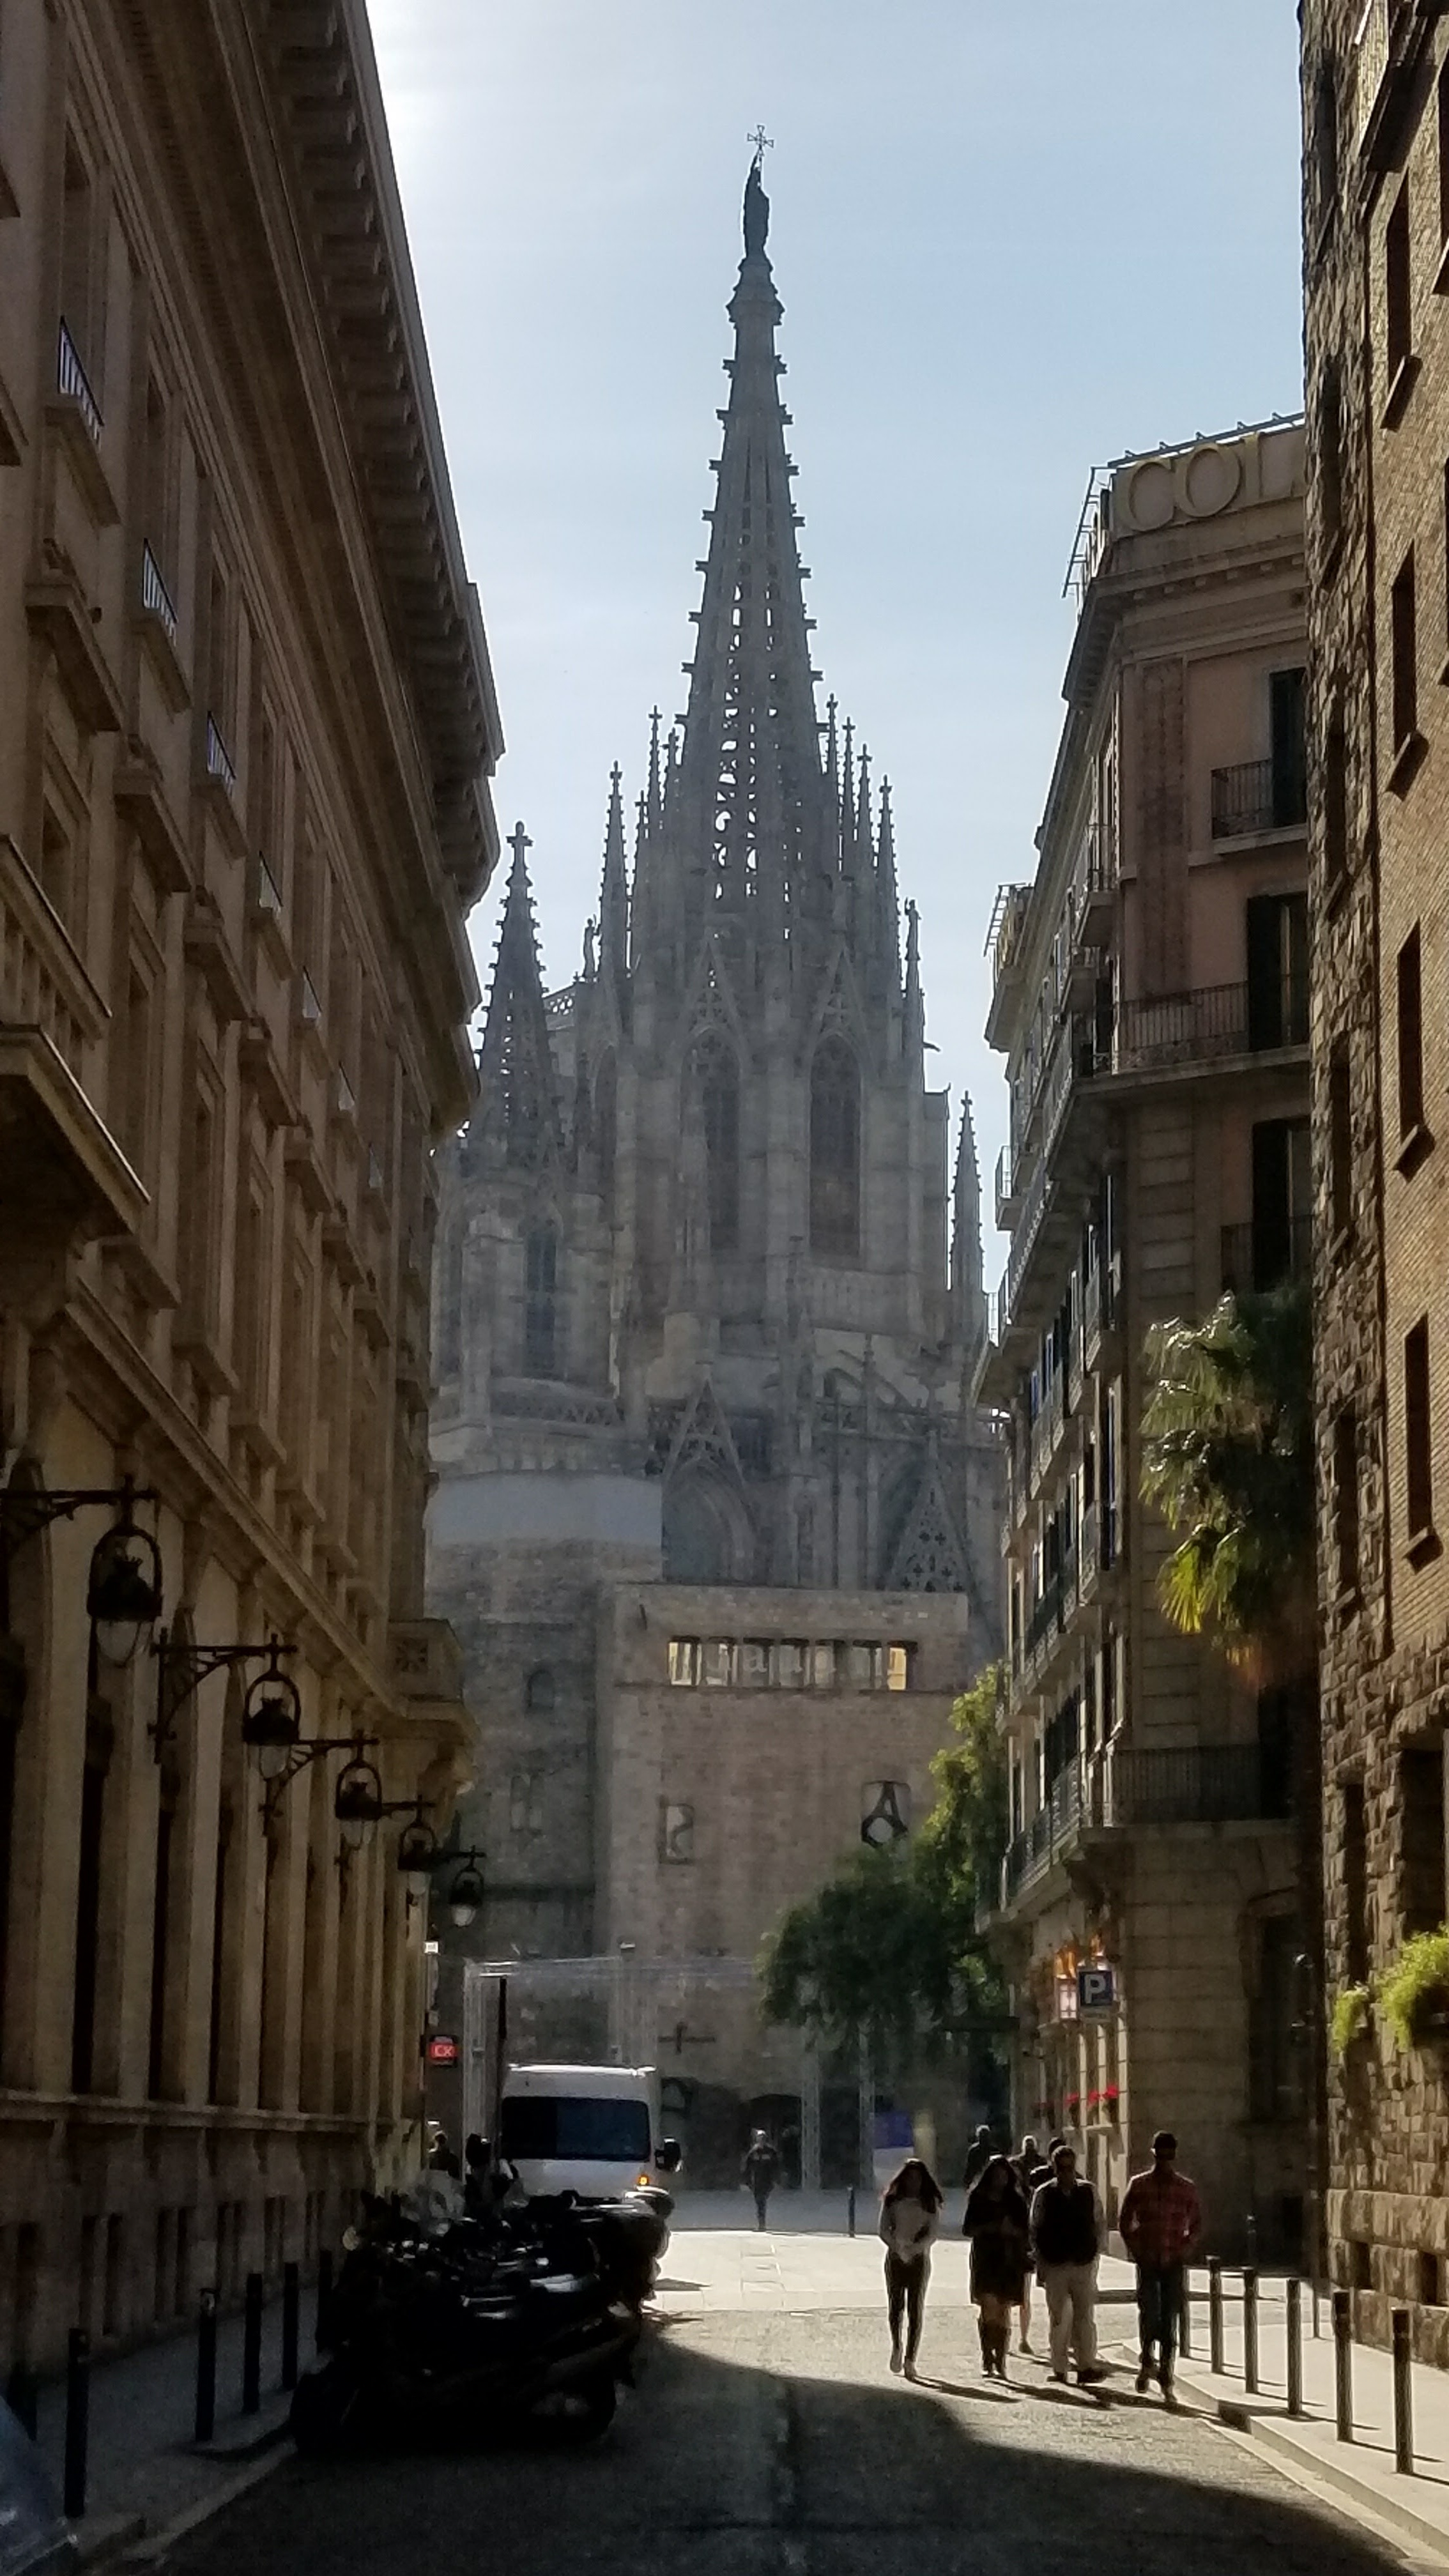 Gaudi's Segrada Familia